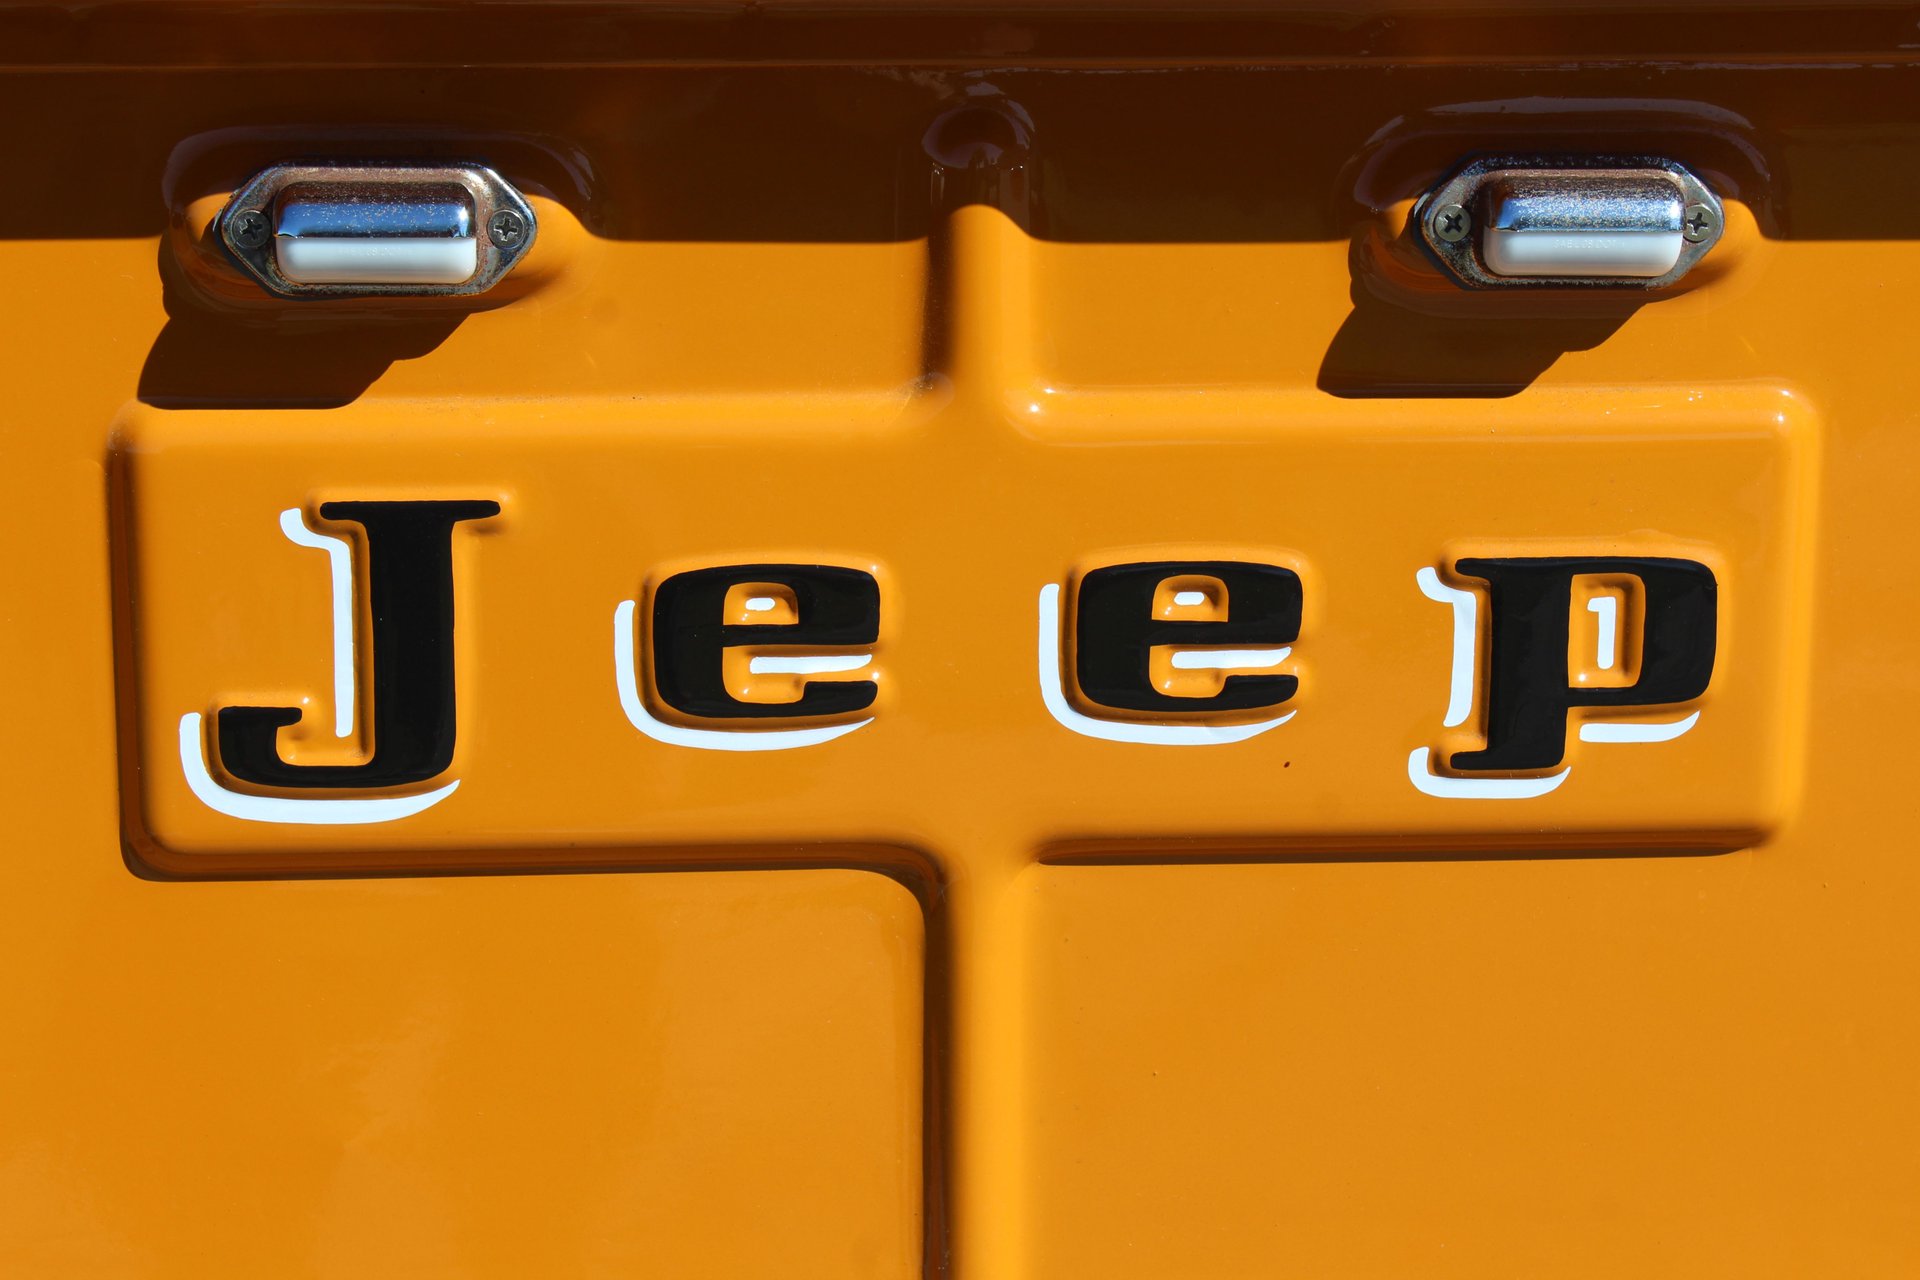 For Sale 1972 Jeep CJ-5